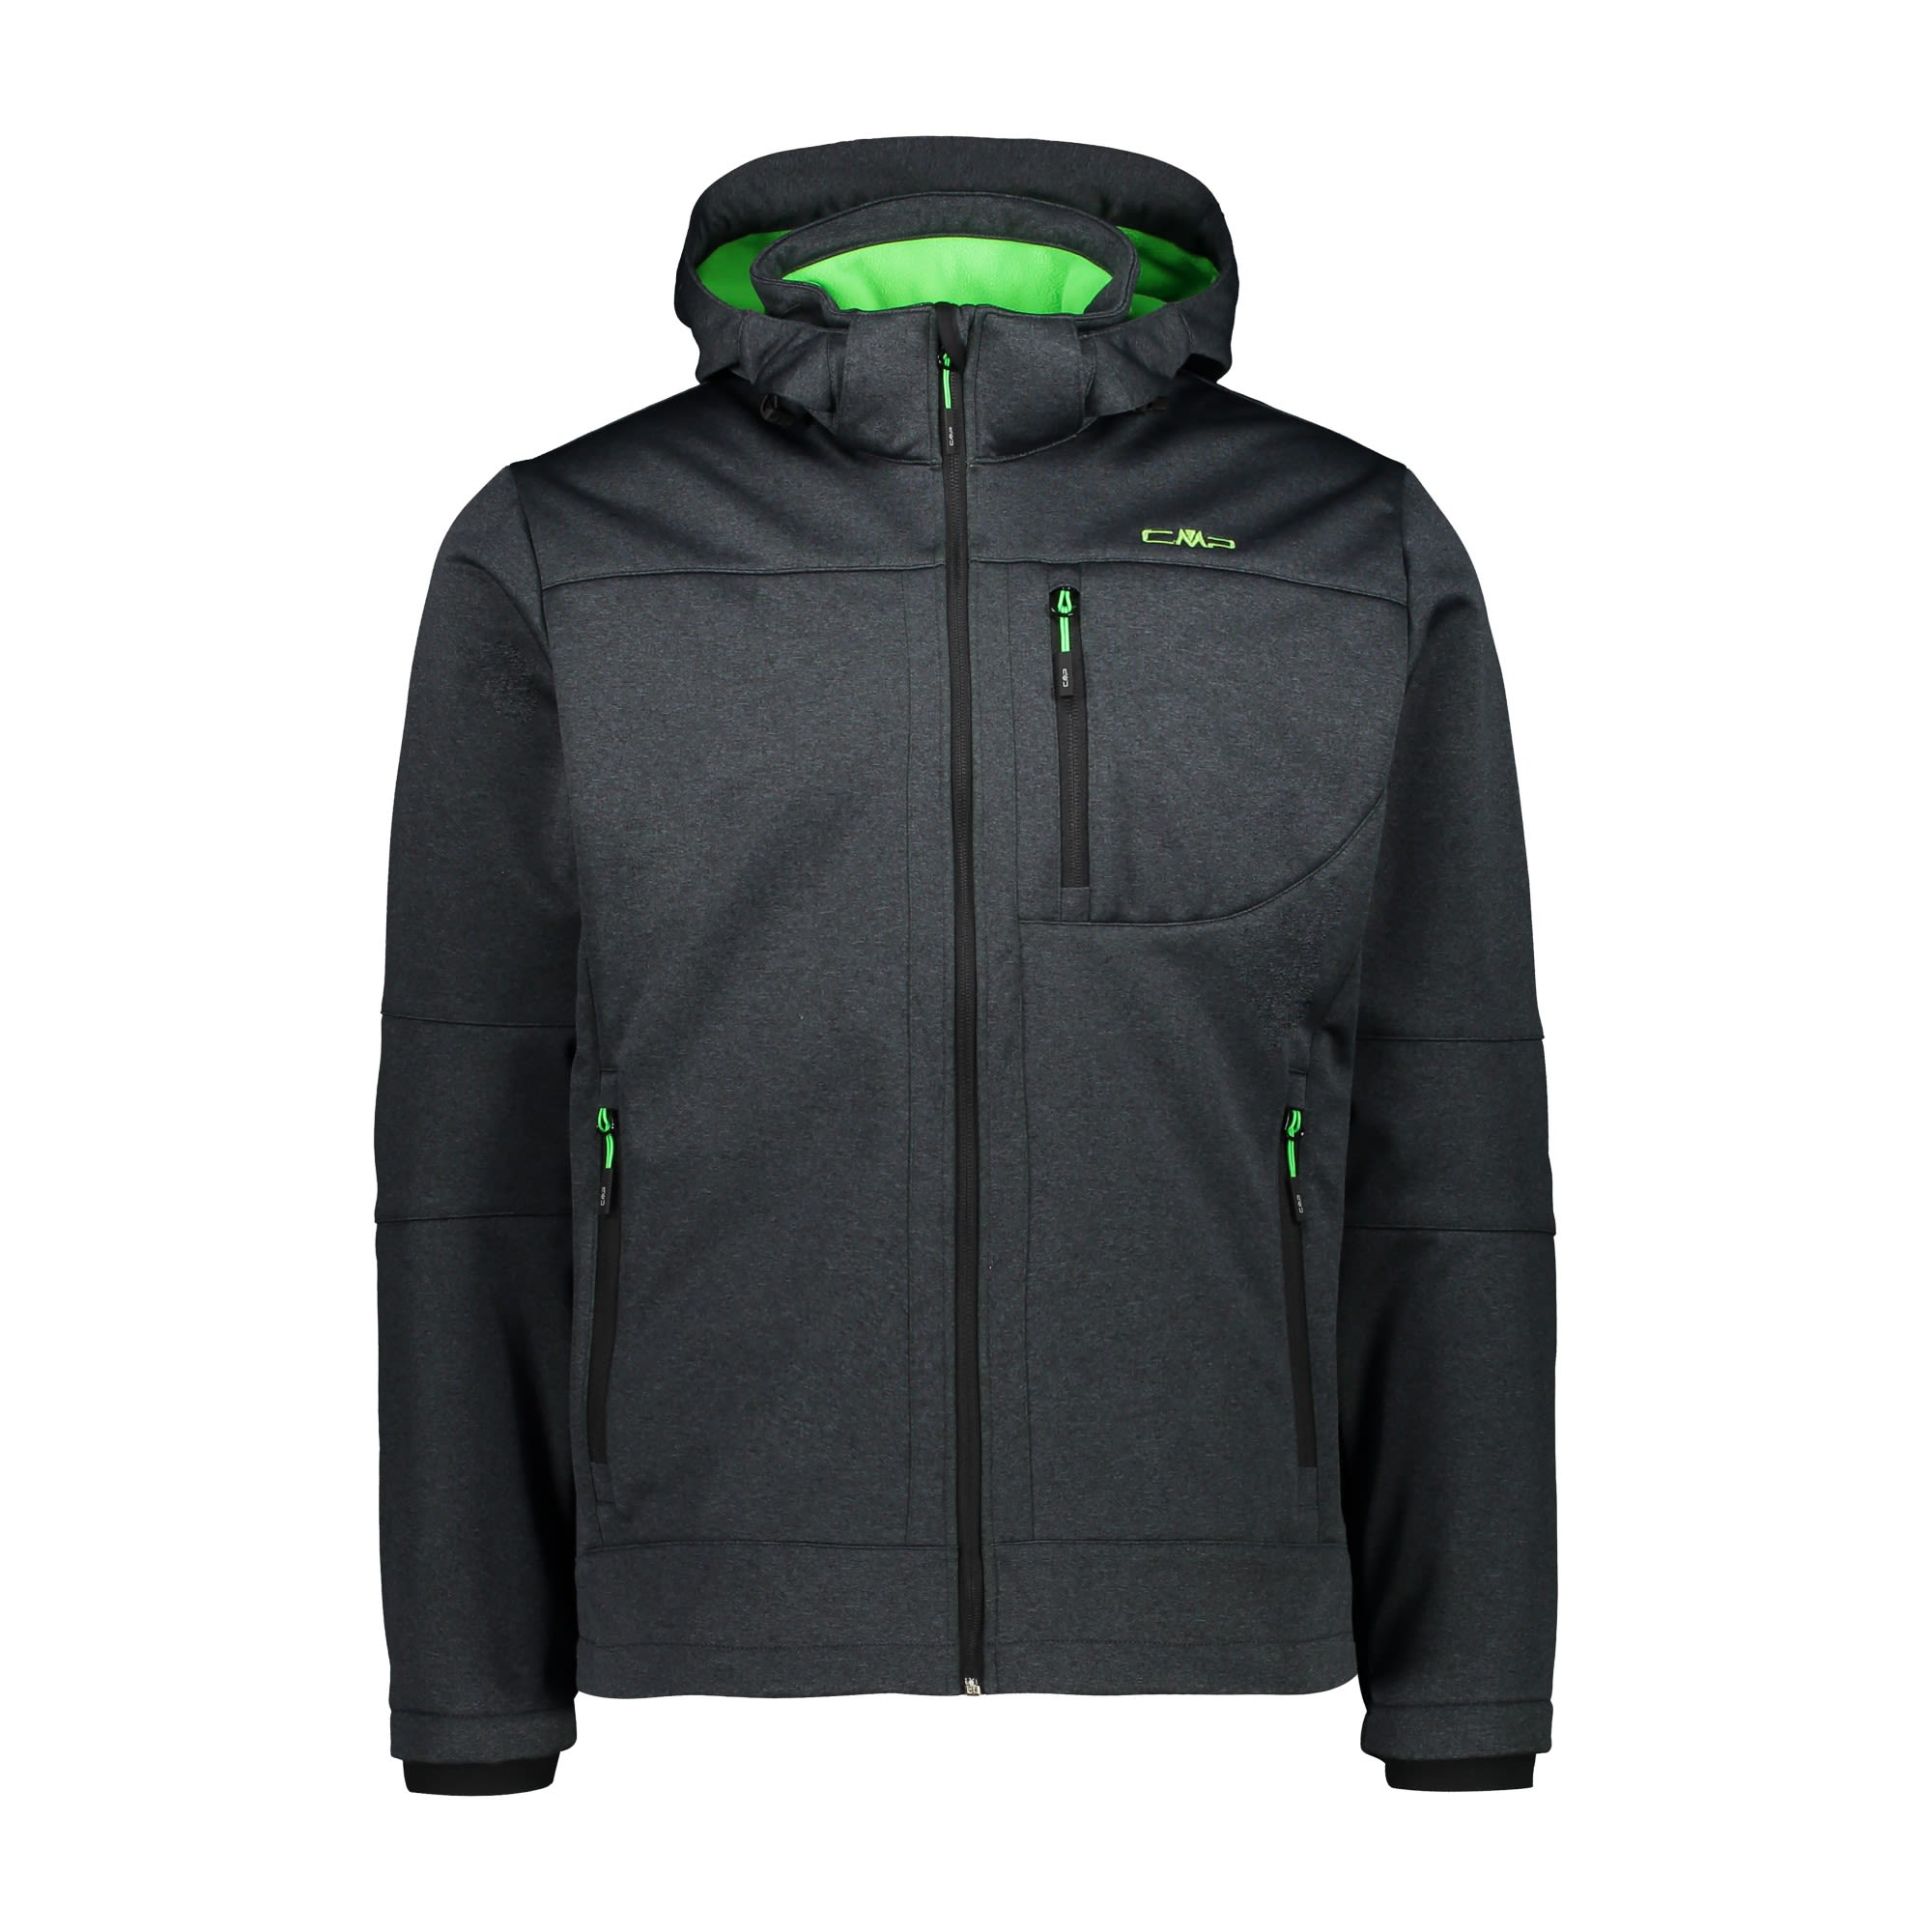 CMP Jacket Zip Hood Softshell Melange Grau- Male Anoraks- Grsse 48 - Farbe Asphalt Melange - Verde Fluo unter CMP